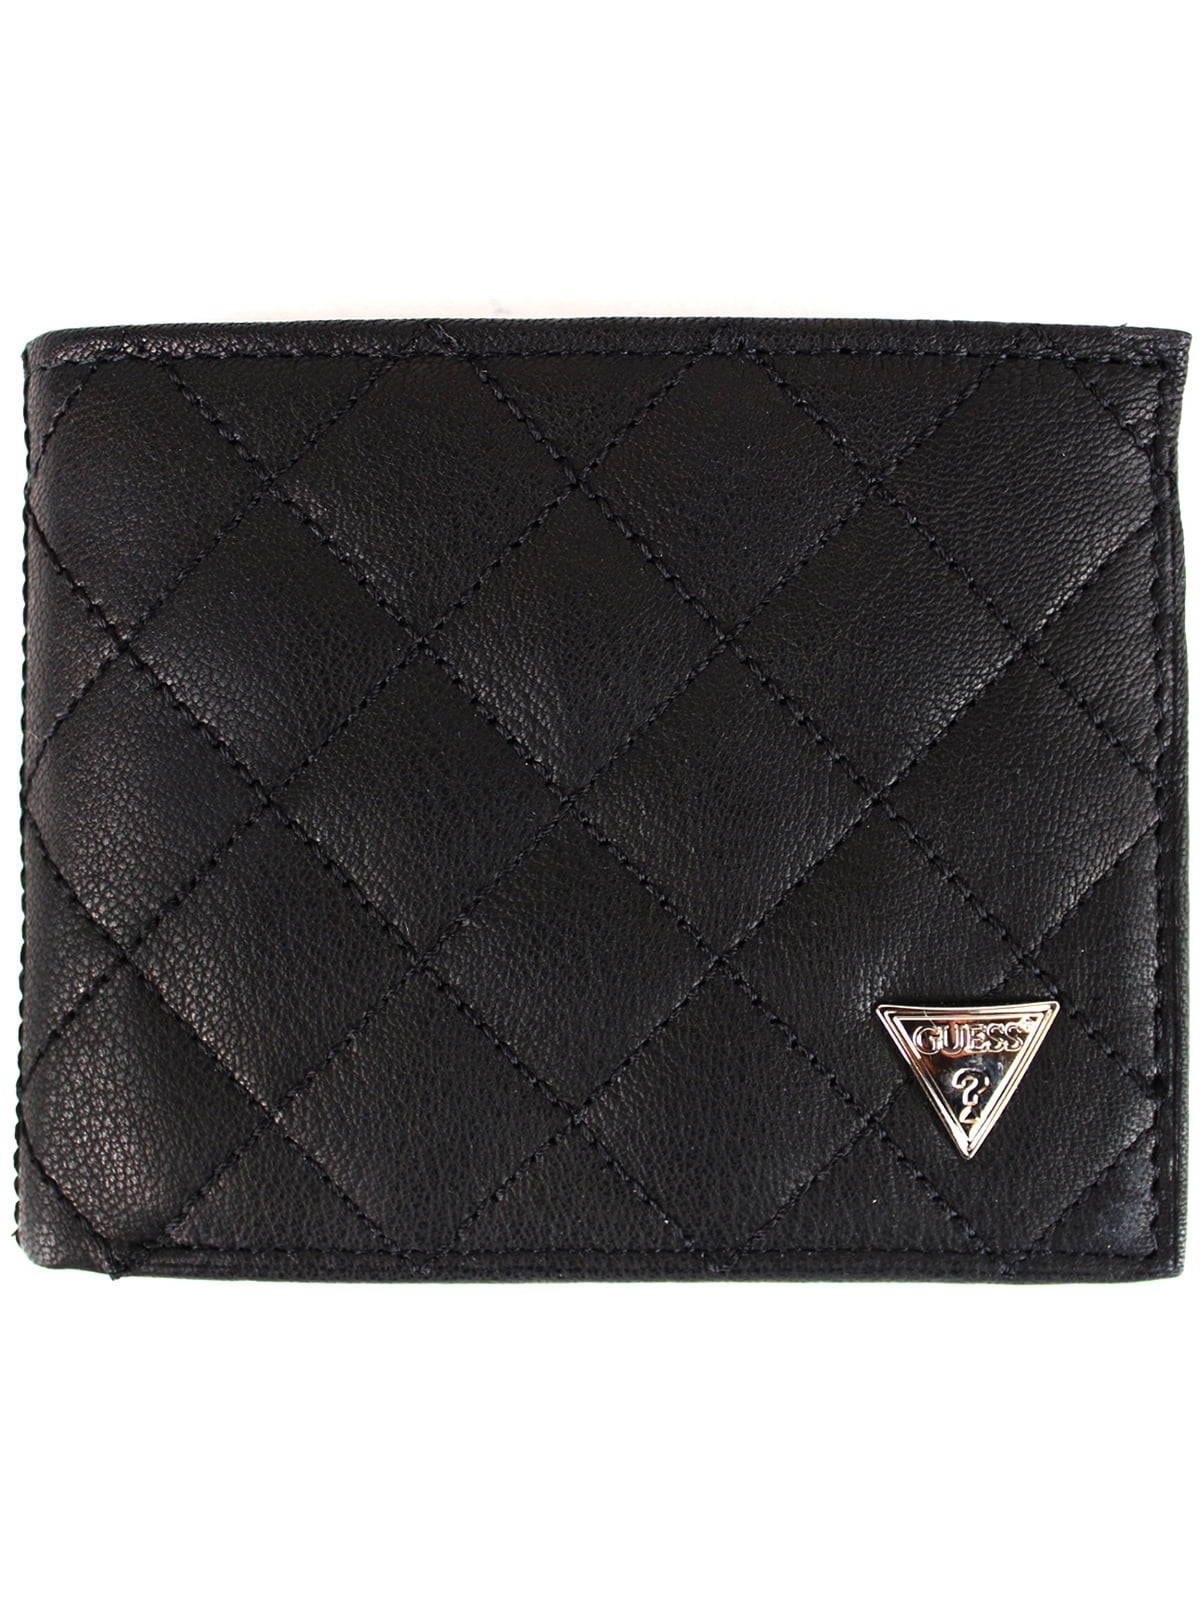 Guess Men's Black Leather Double Billfold Passcase Wallet - Walmart.com